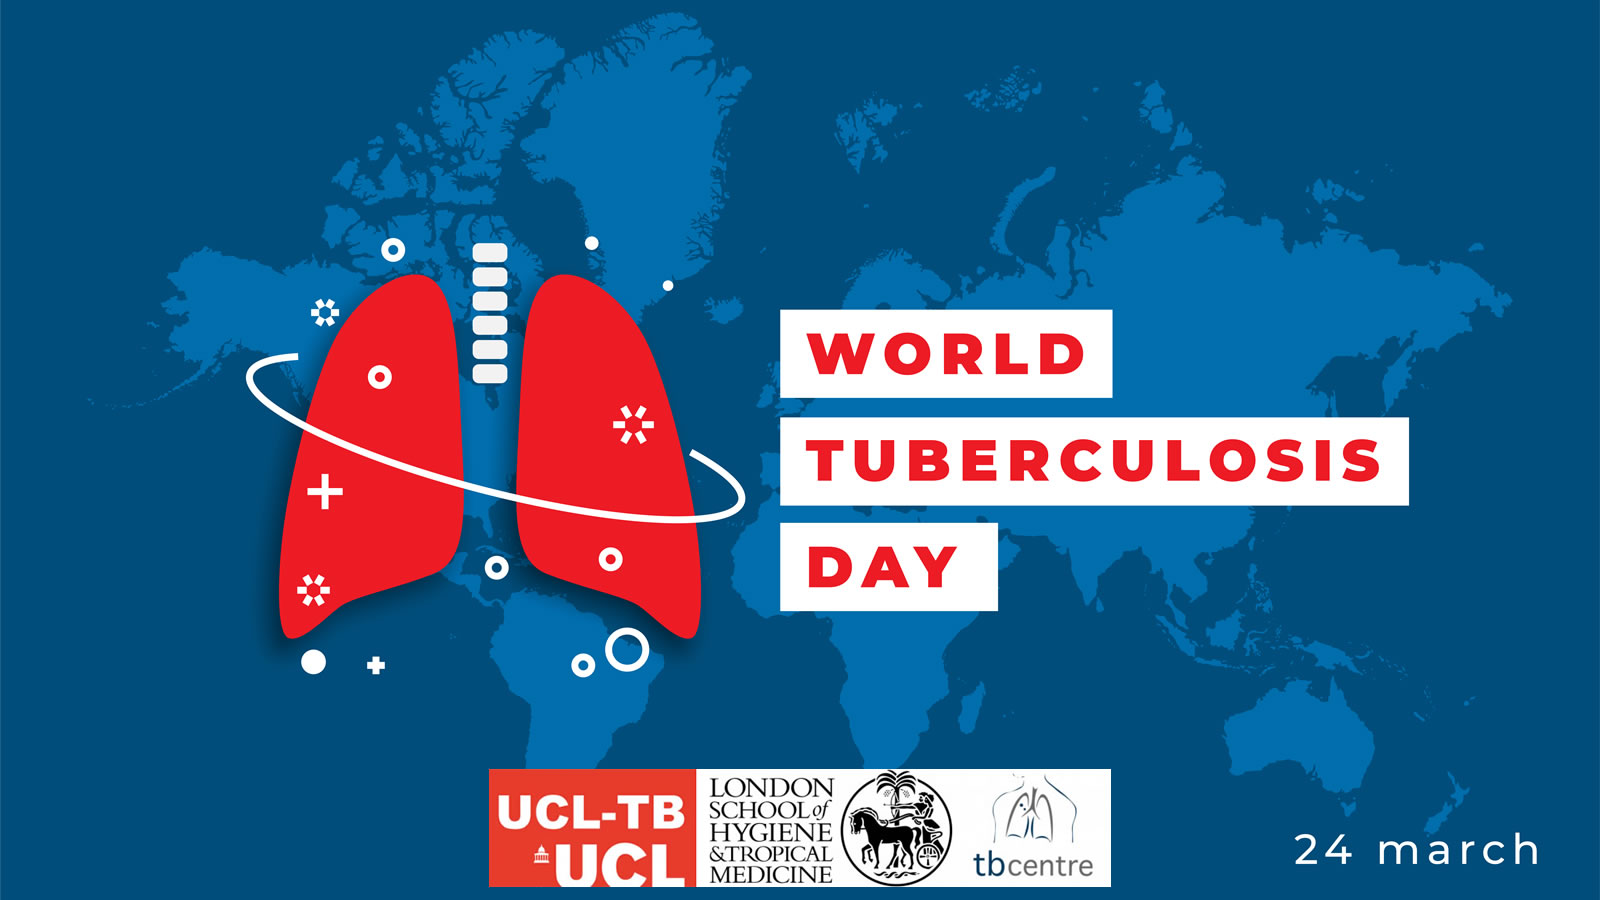 World TB Day Symposium image and Eventbrite link 